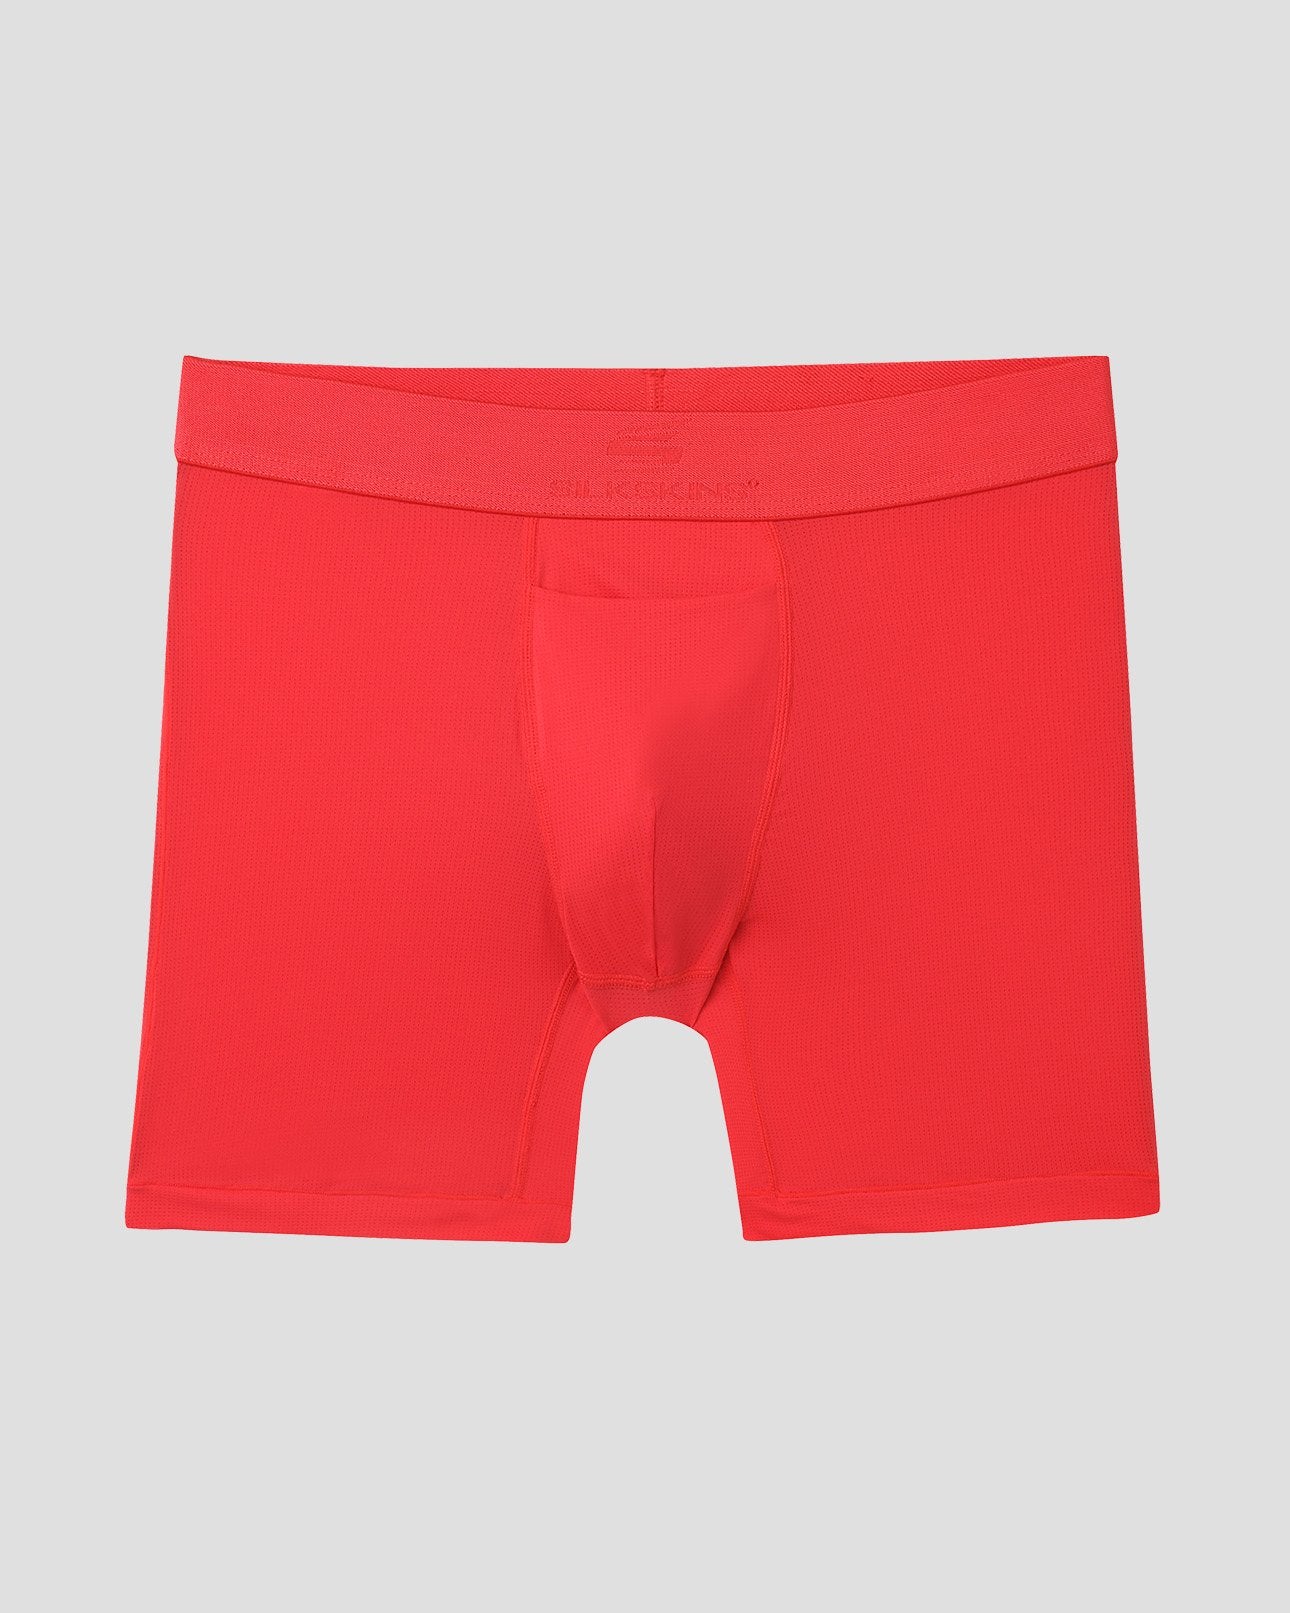 SilRiver Men's Silk Satin Briefs Bikini Underwear Bulge Enhancing Panties  for Men underpants (Aqua Blue, Small) at  Men's Clothing store